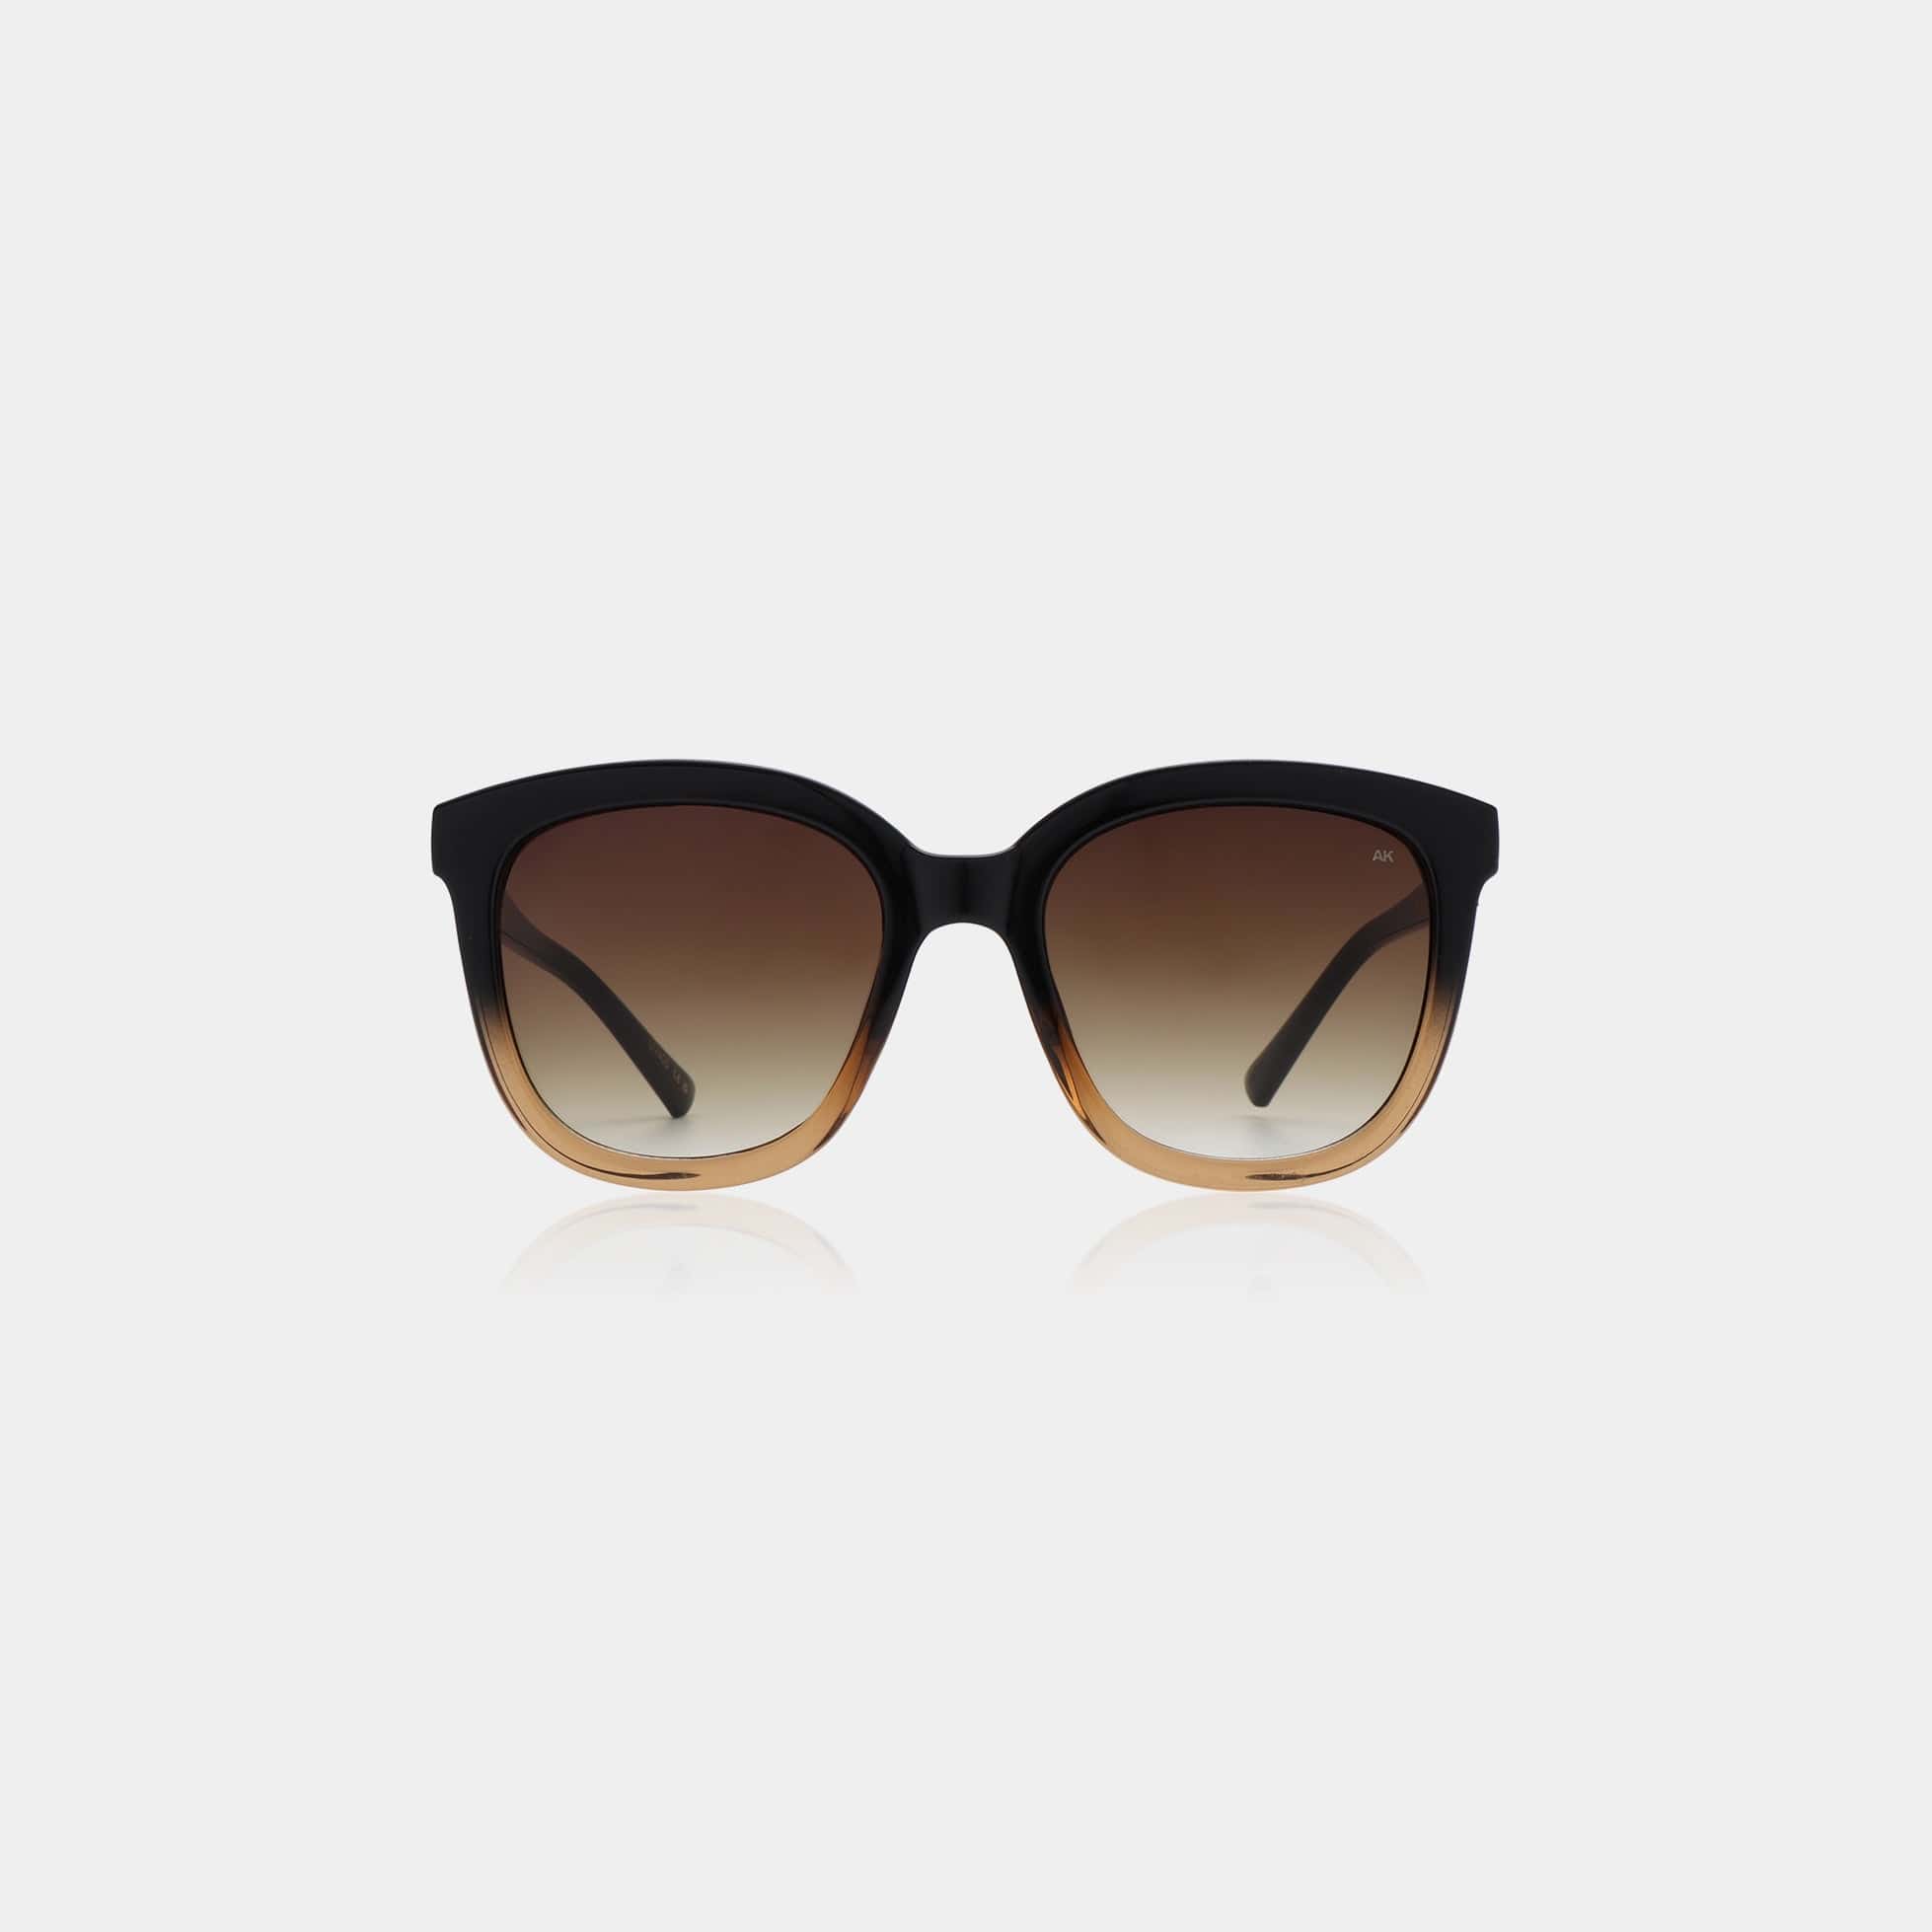 A.Kjærbede Sunglasses Billy Black Brown-Transparent SUNGLASSES  - ZIGZAG Footwear